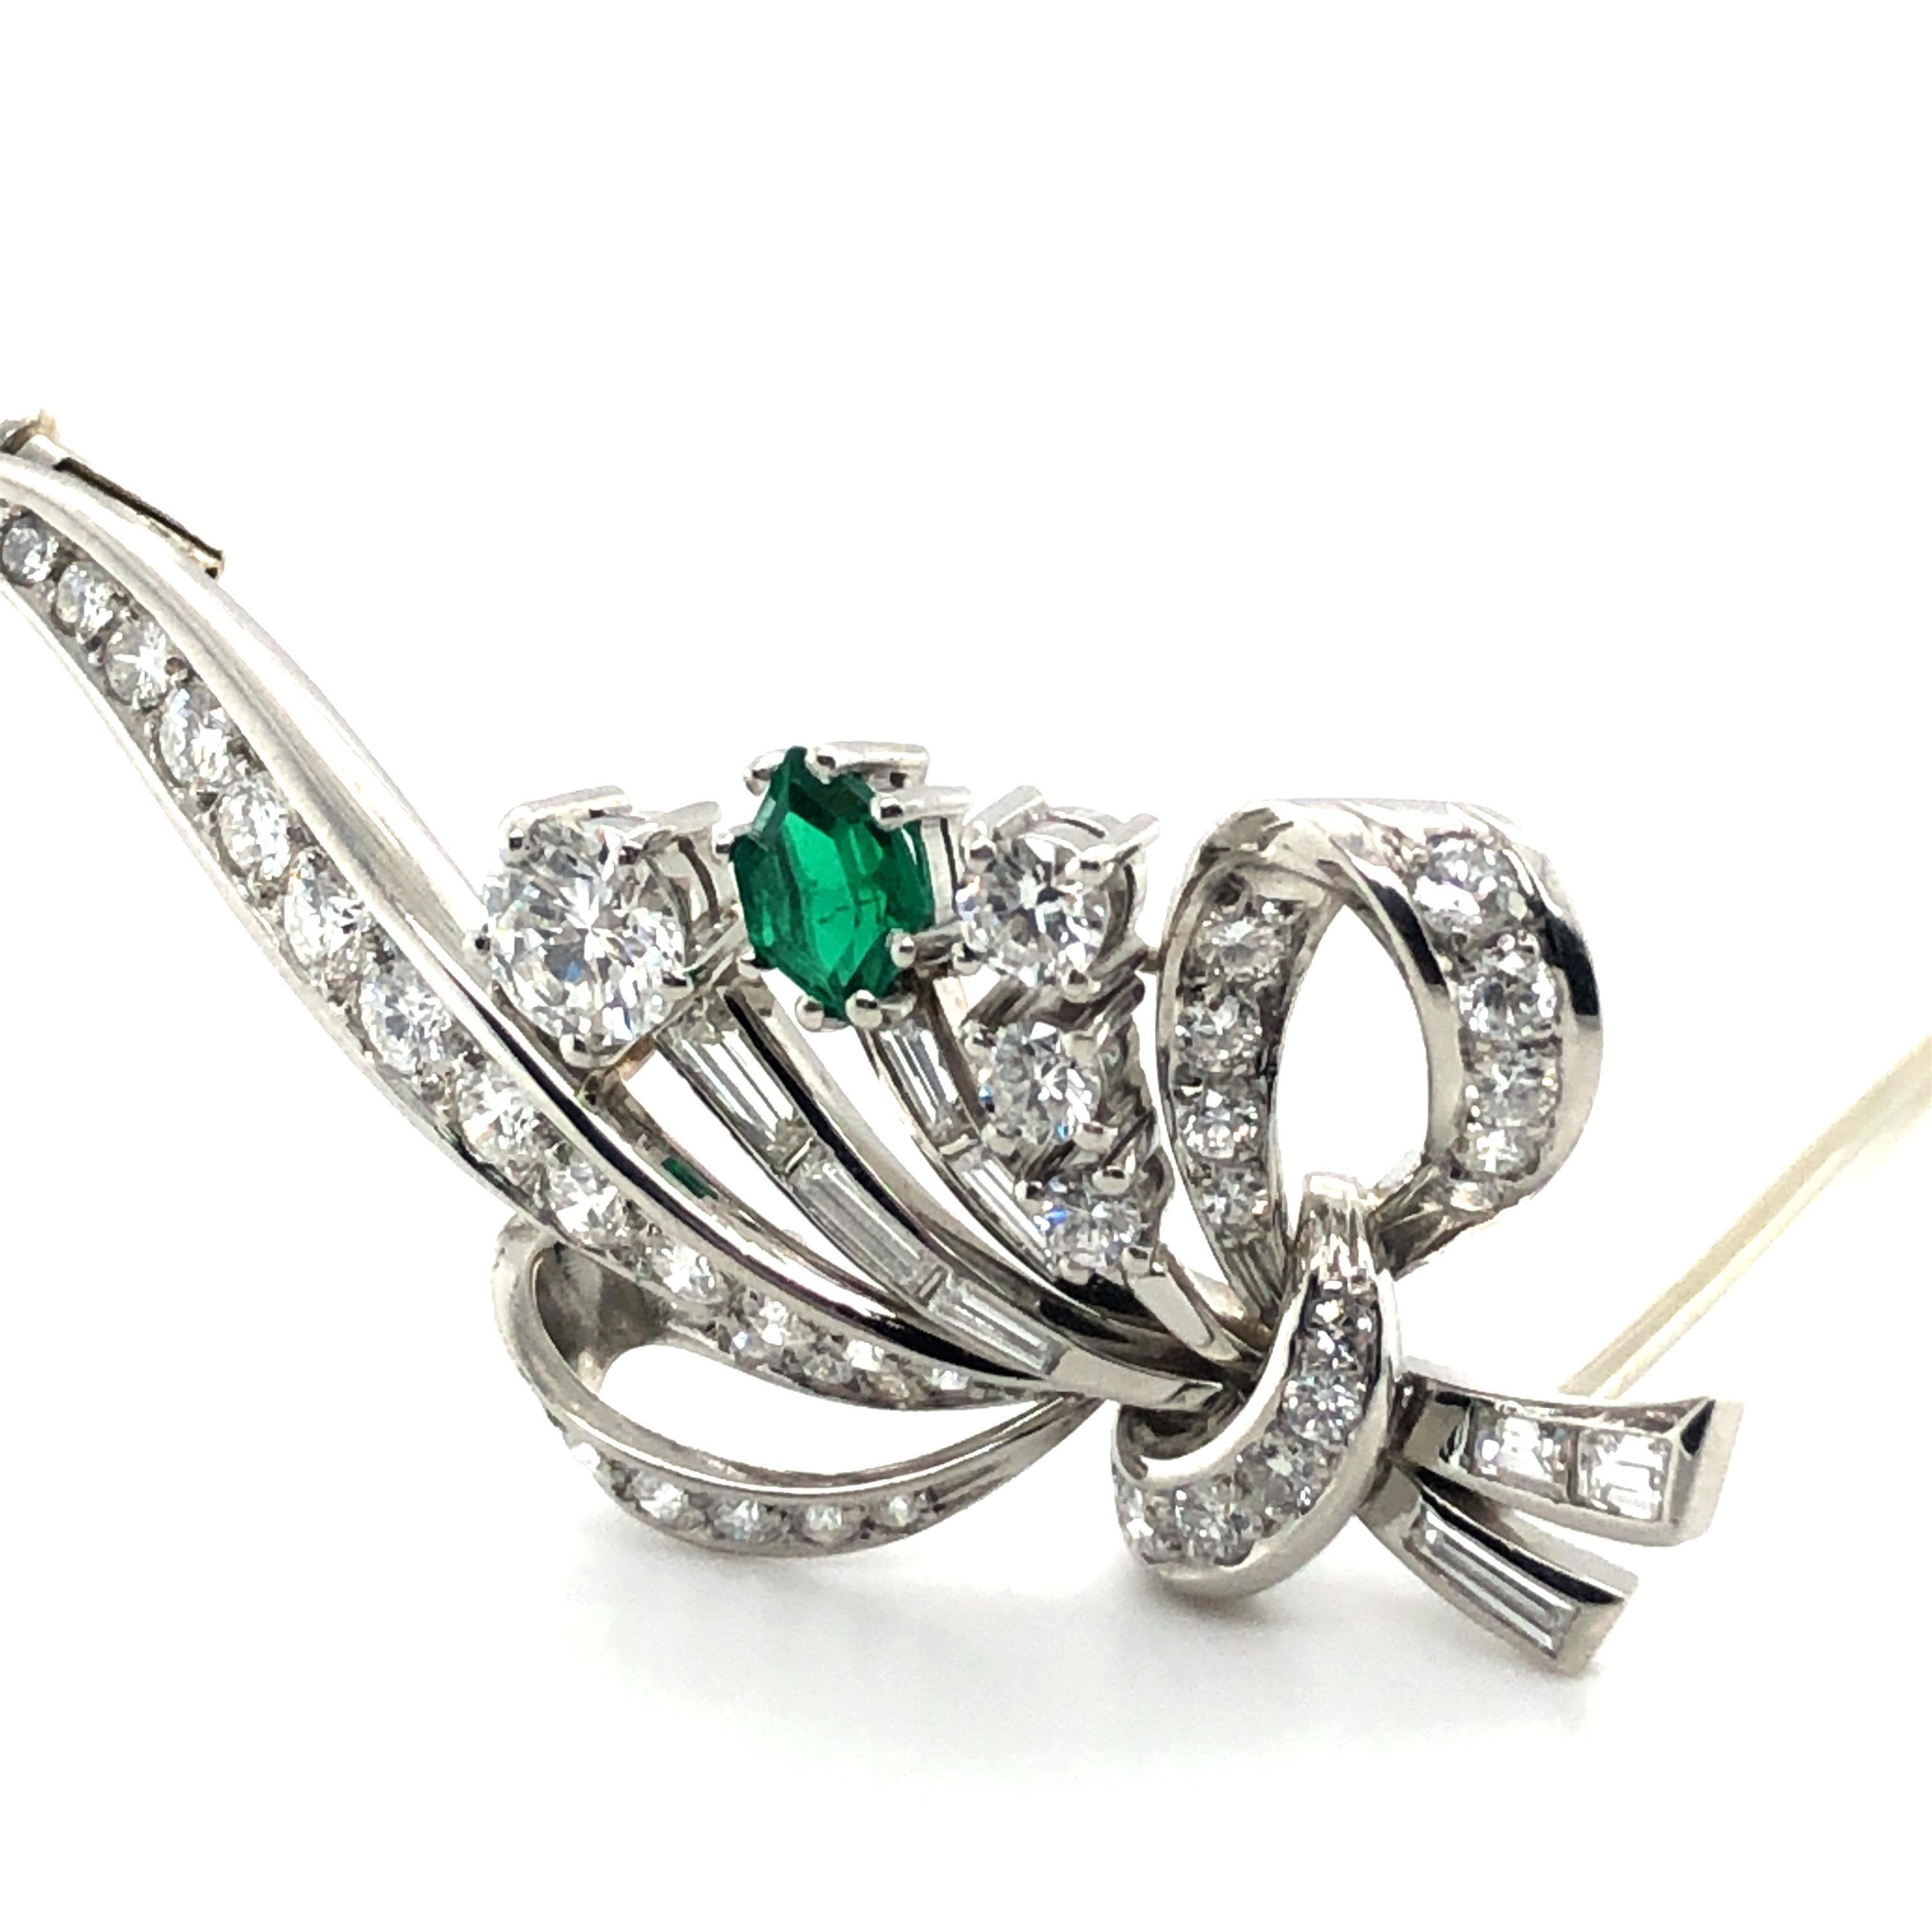 Brilliant Cut Elegant Meister Diamond Brooch with Emerald in Platinum 950 For Sale